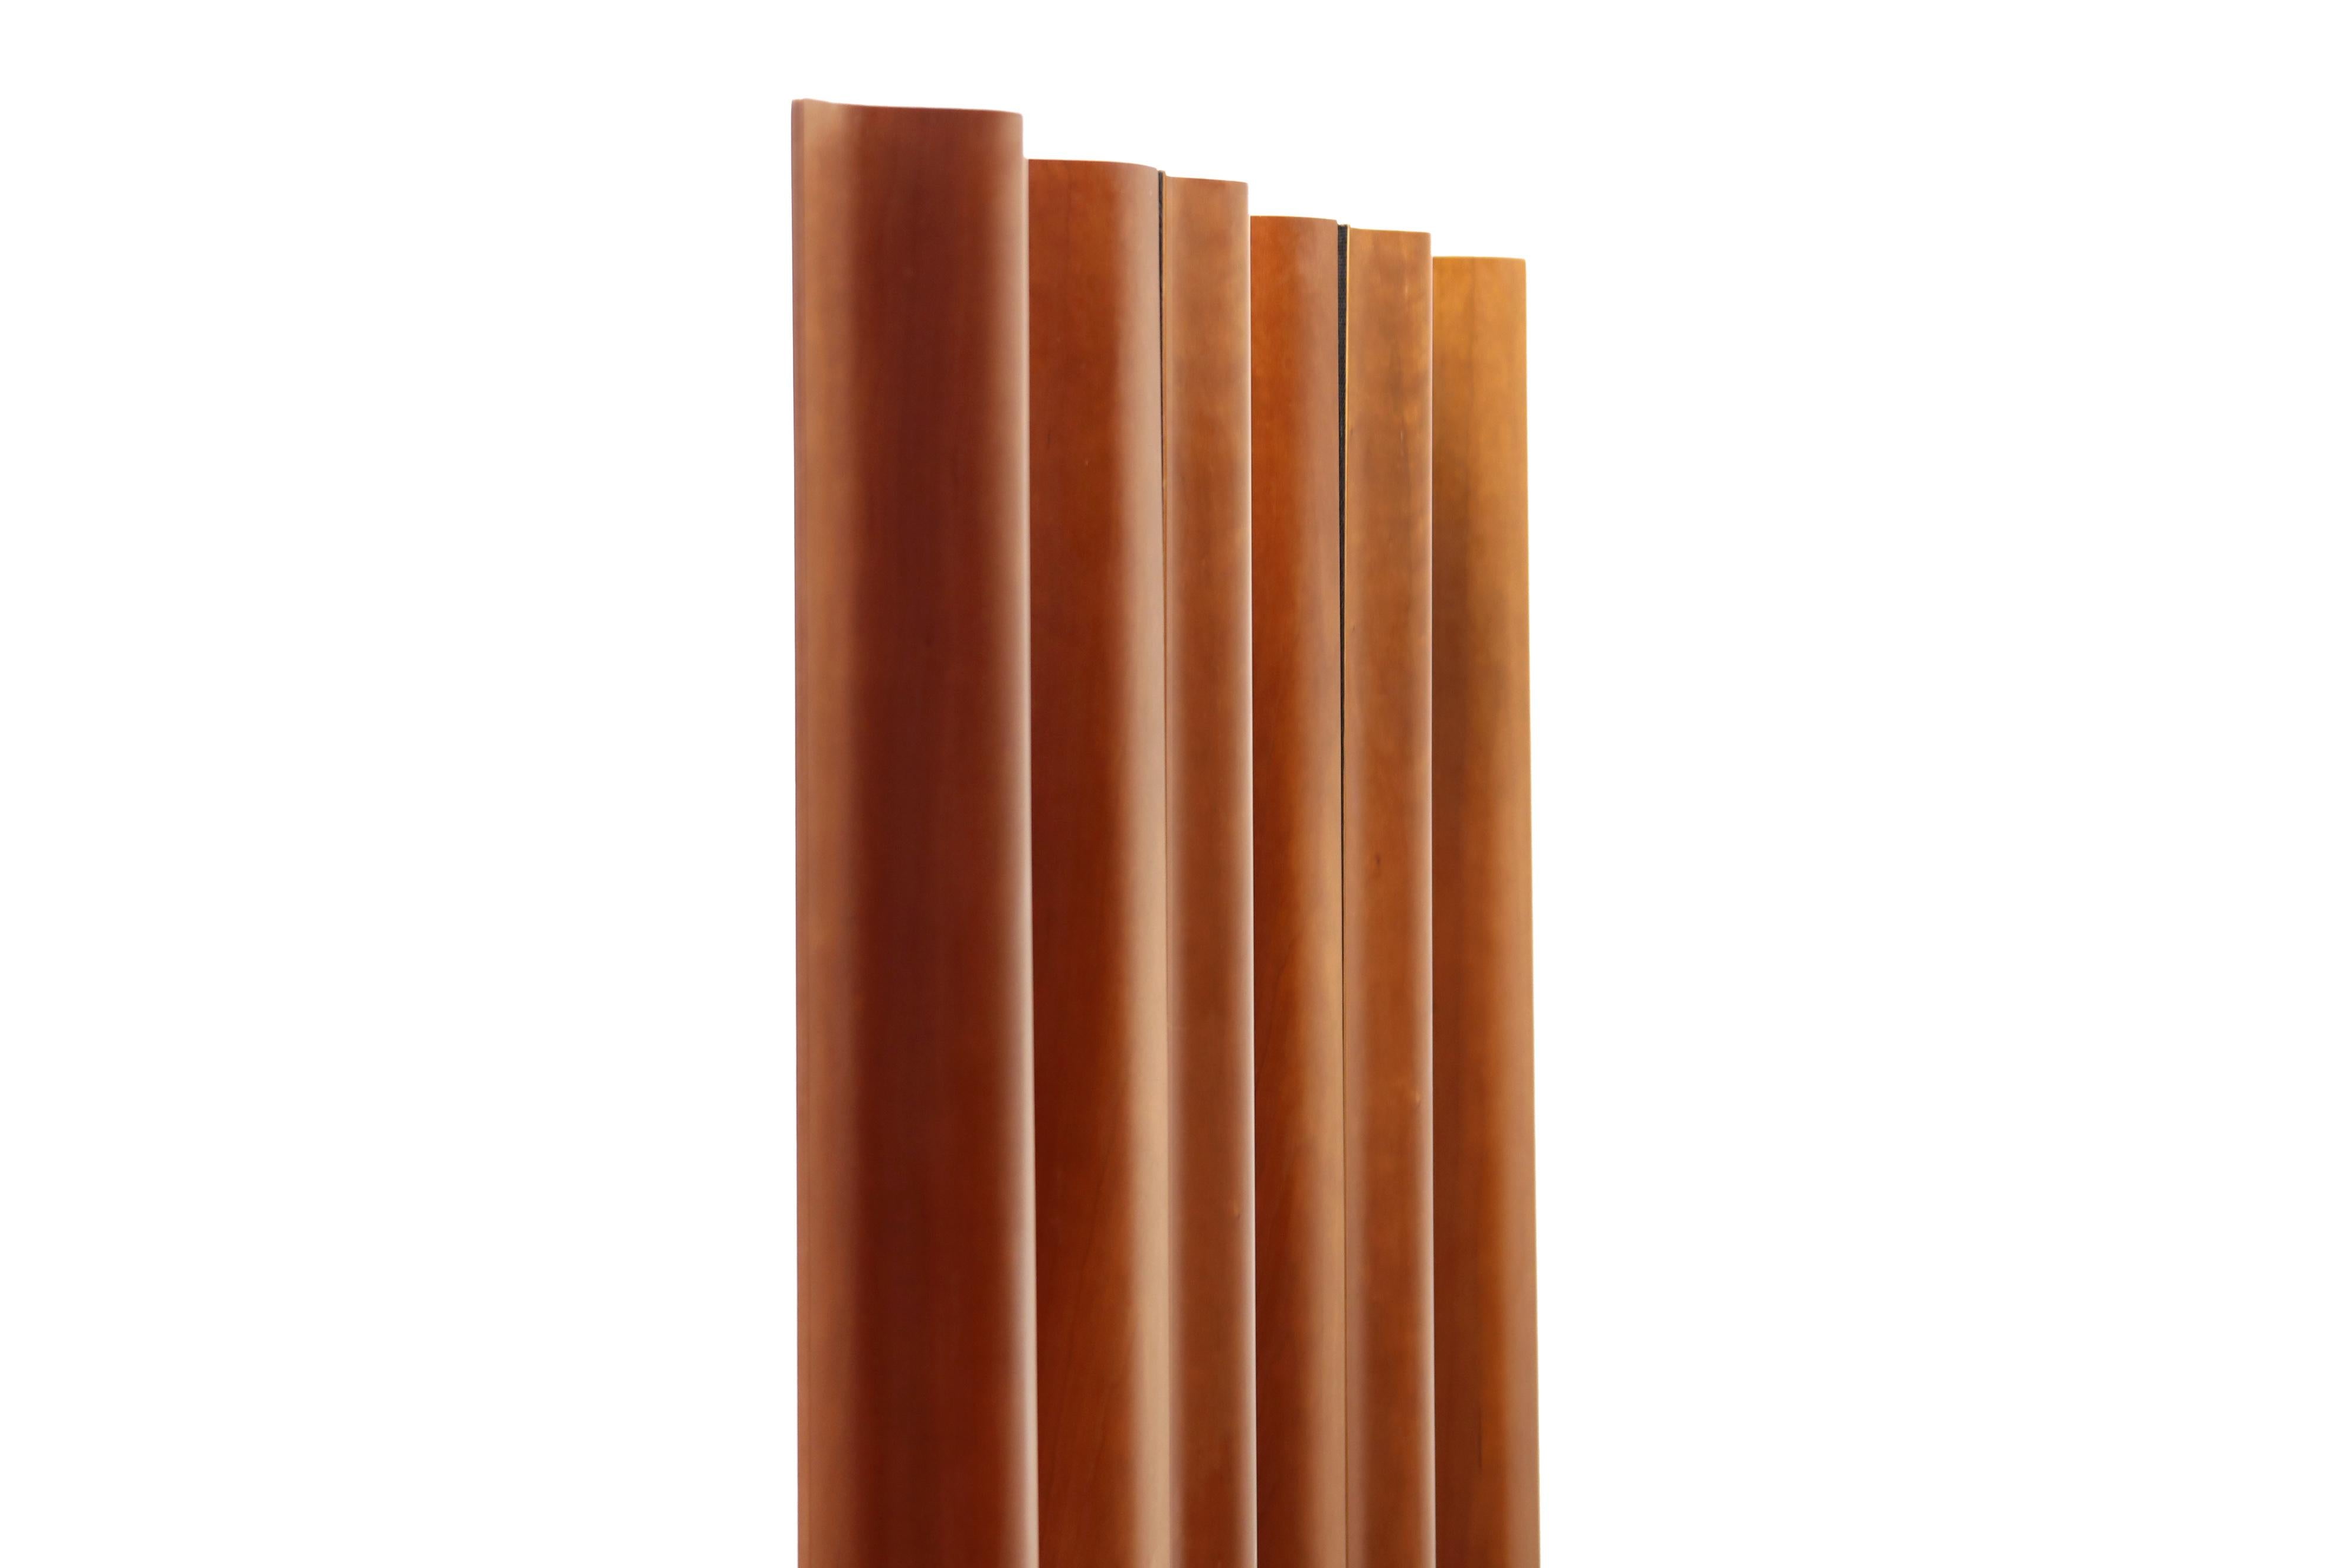 American Eames Plywood Folding Room Divider for Herman Miller